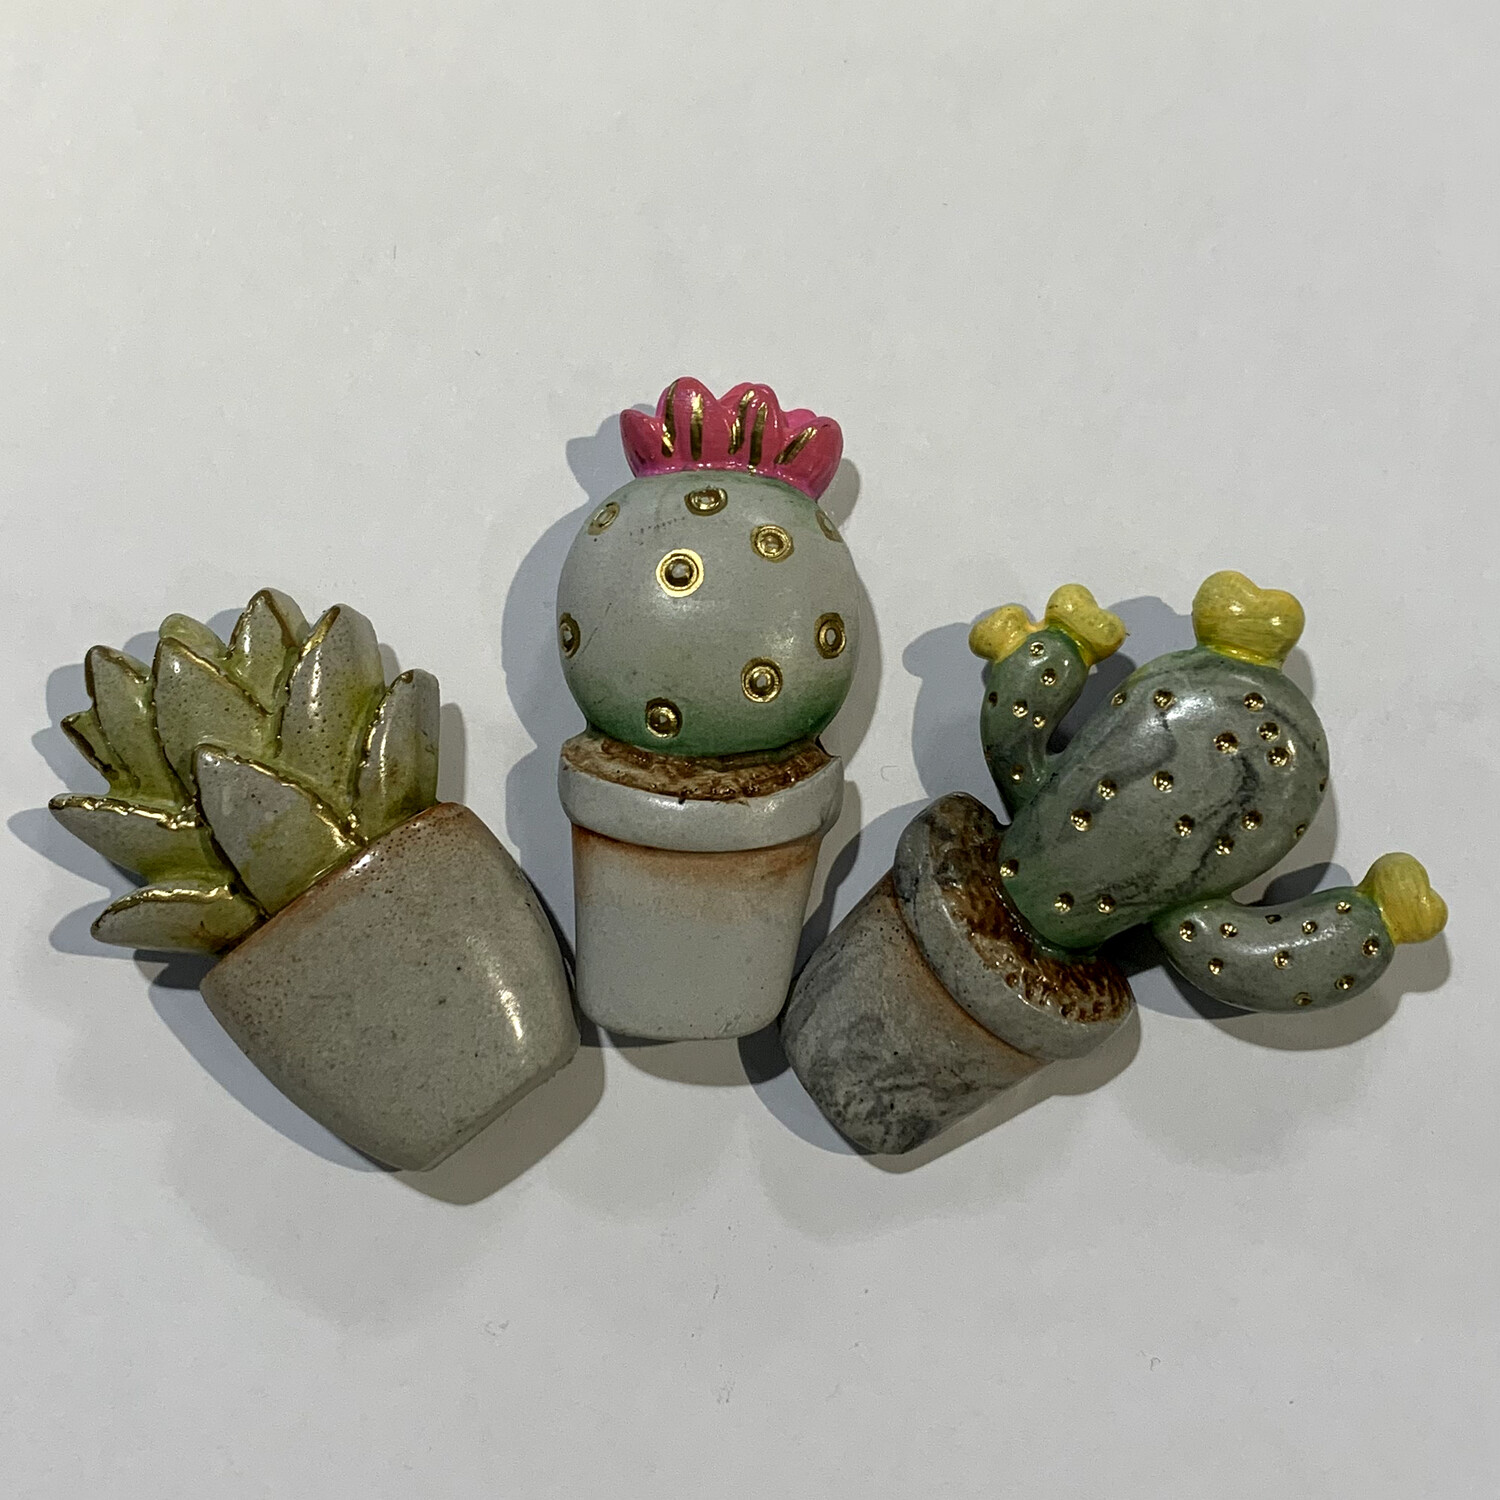 Plant/Cactus magnets